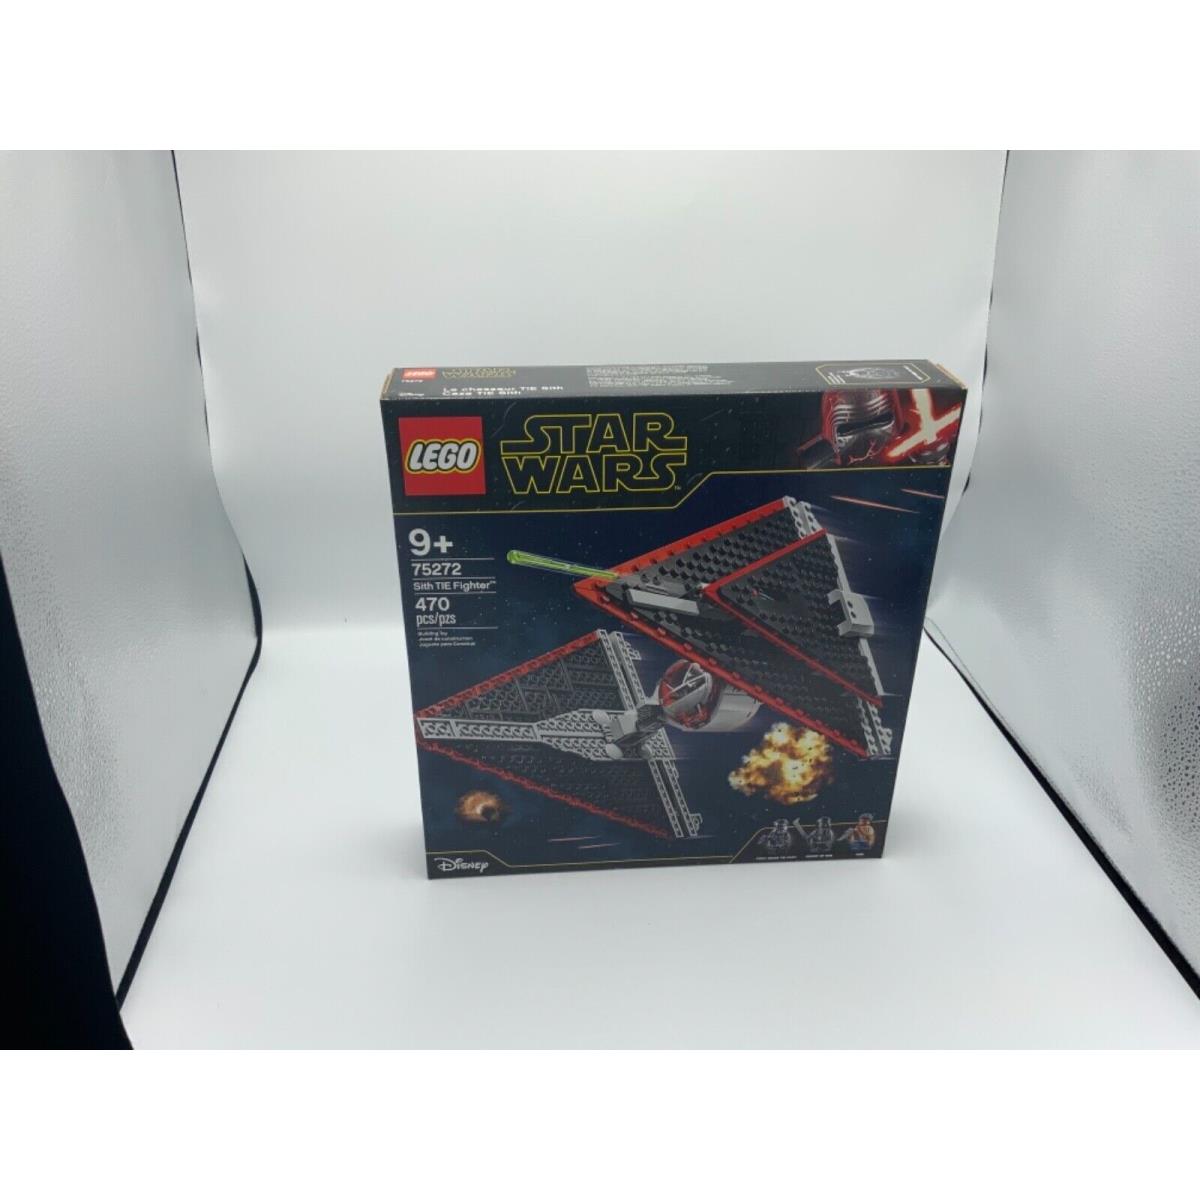 Lego 75272 Lego Star Wars Sith Tie Fighter 75272 Building Kit 2020 470 Piece